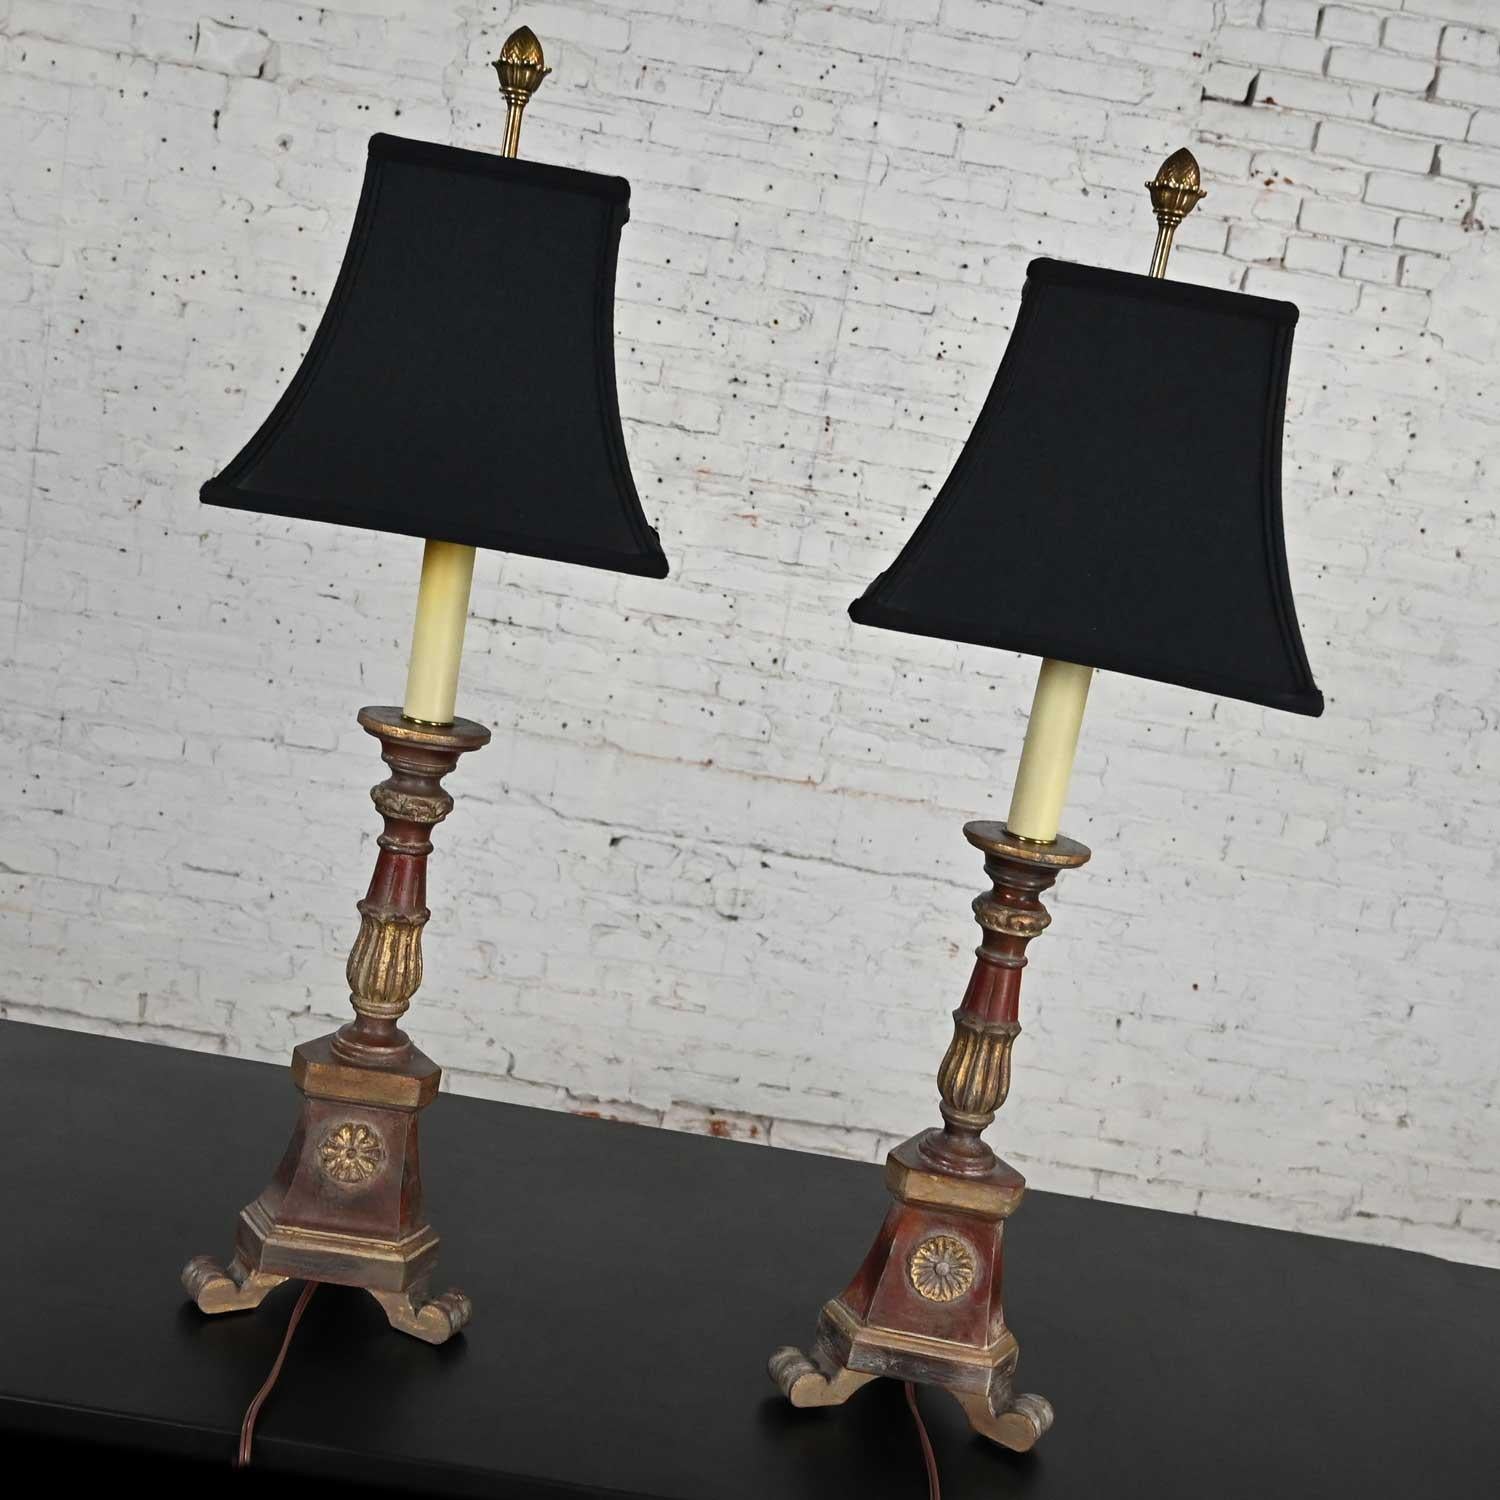 wooden candlestick lamp